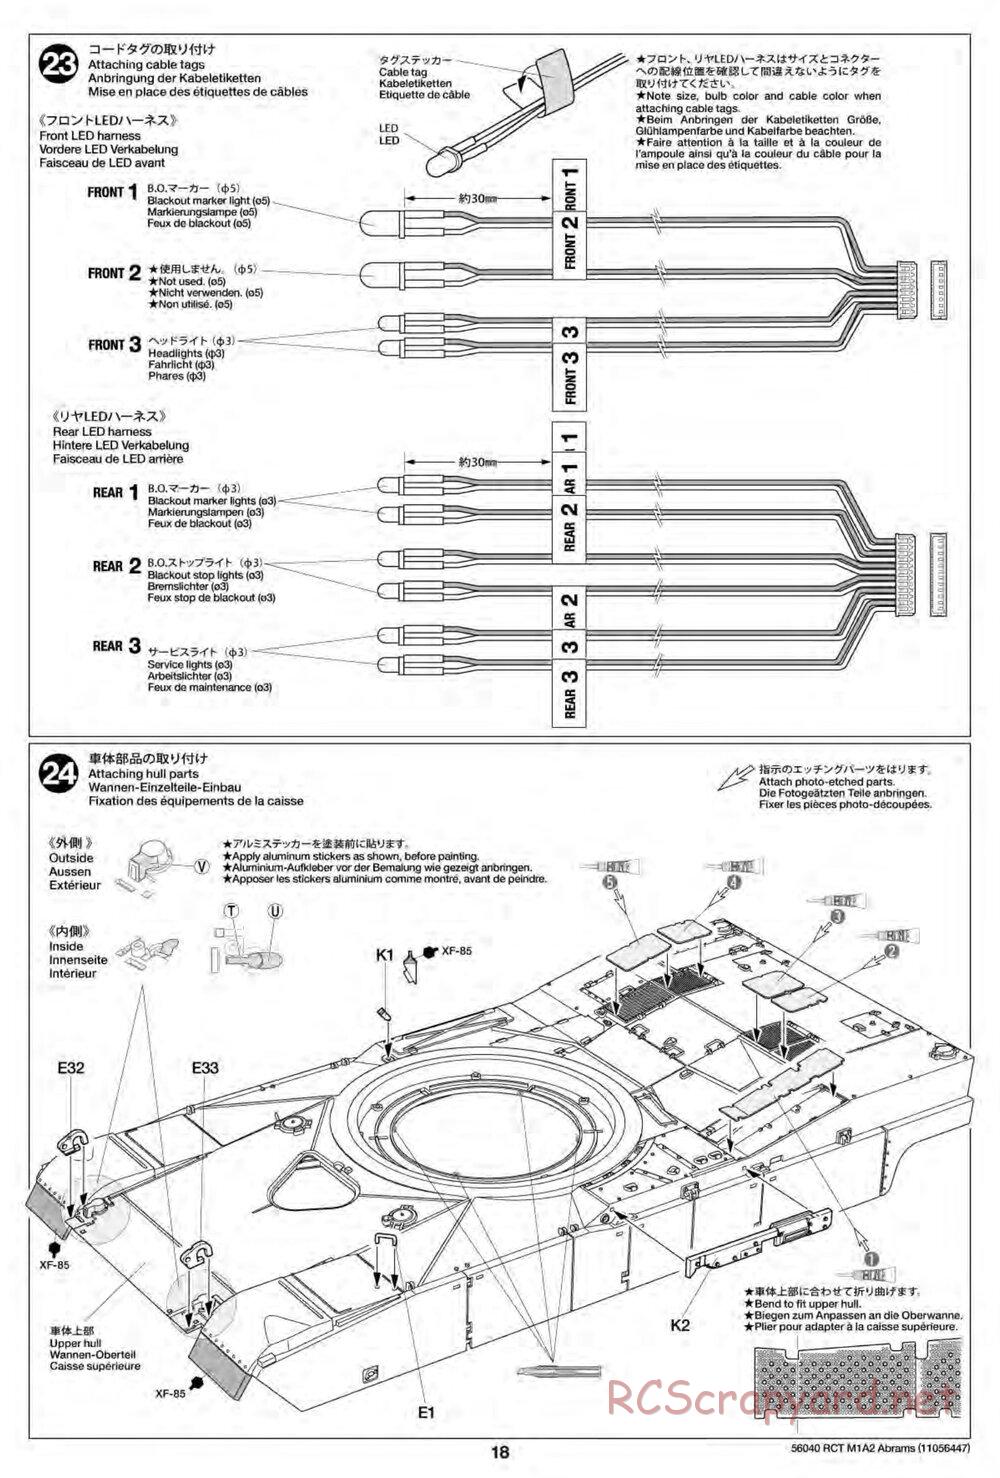 Tamiya - U.S. Main Battle Tank M1A2 Abrams - 1/16 Scale Chassis - Manual - Page 18